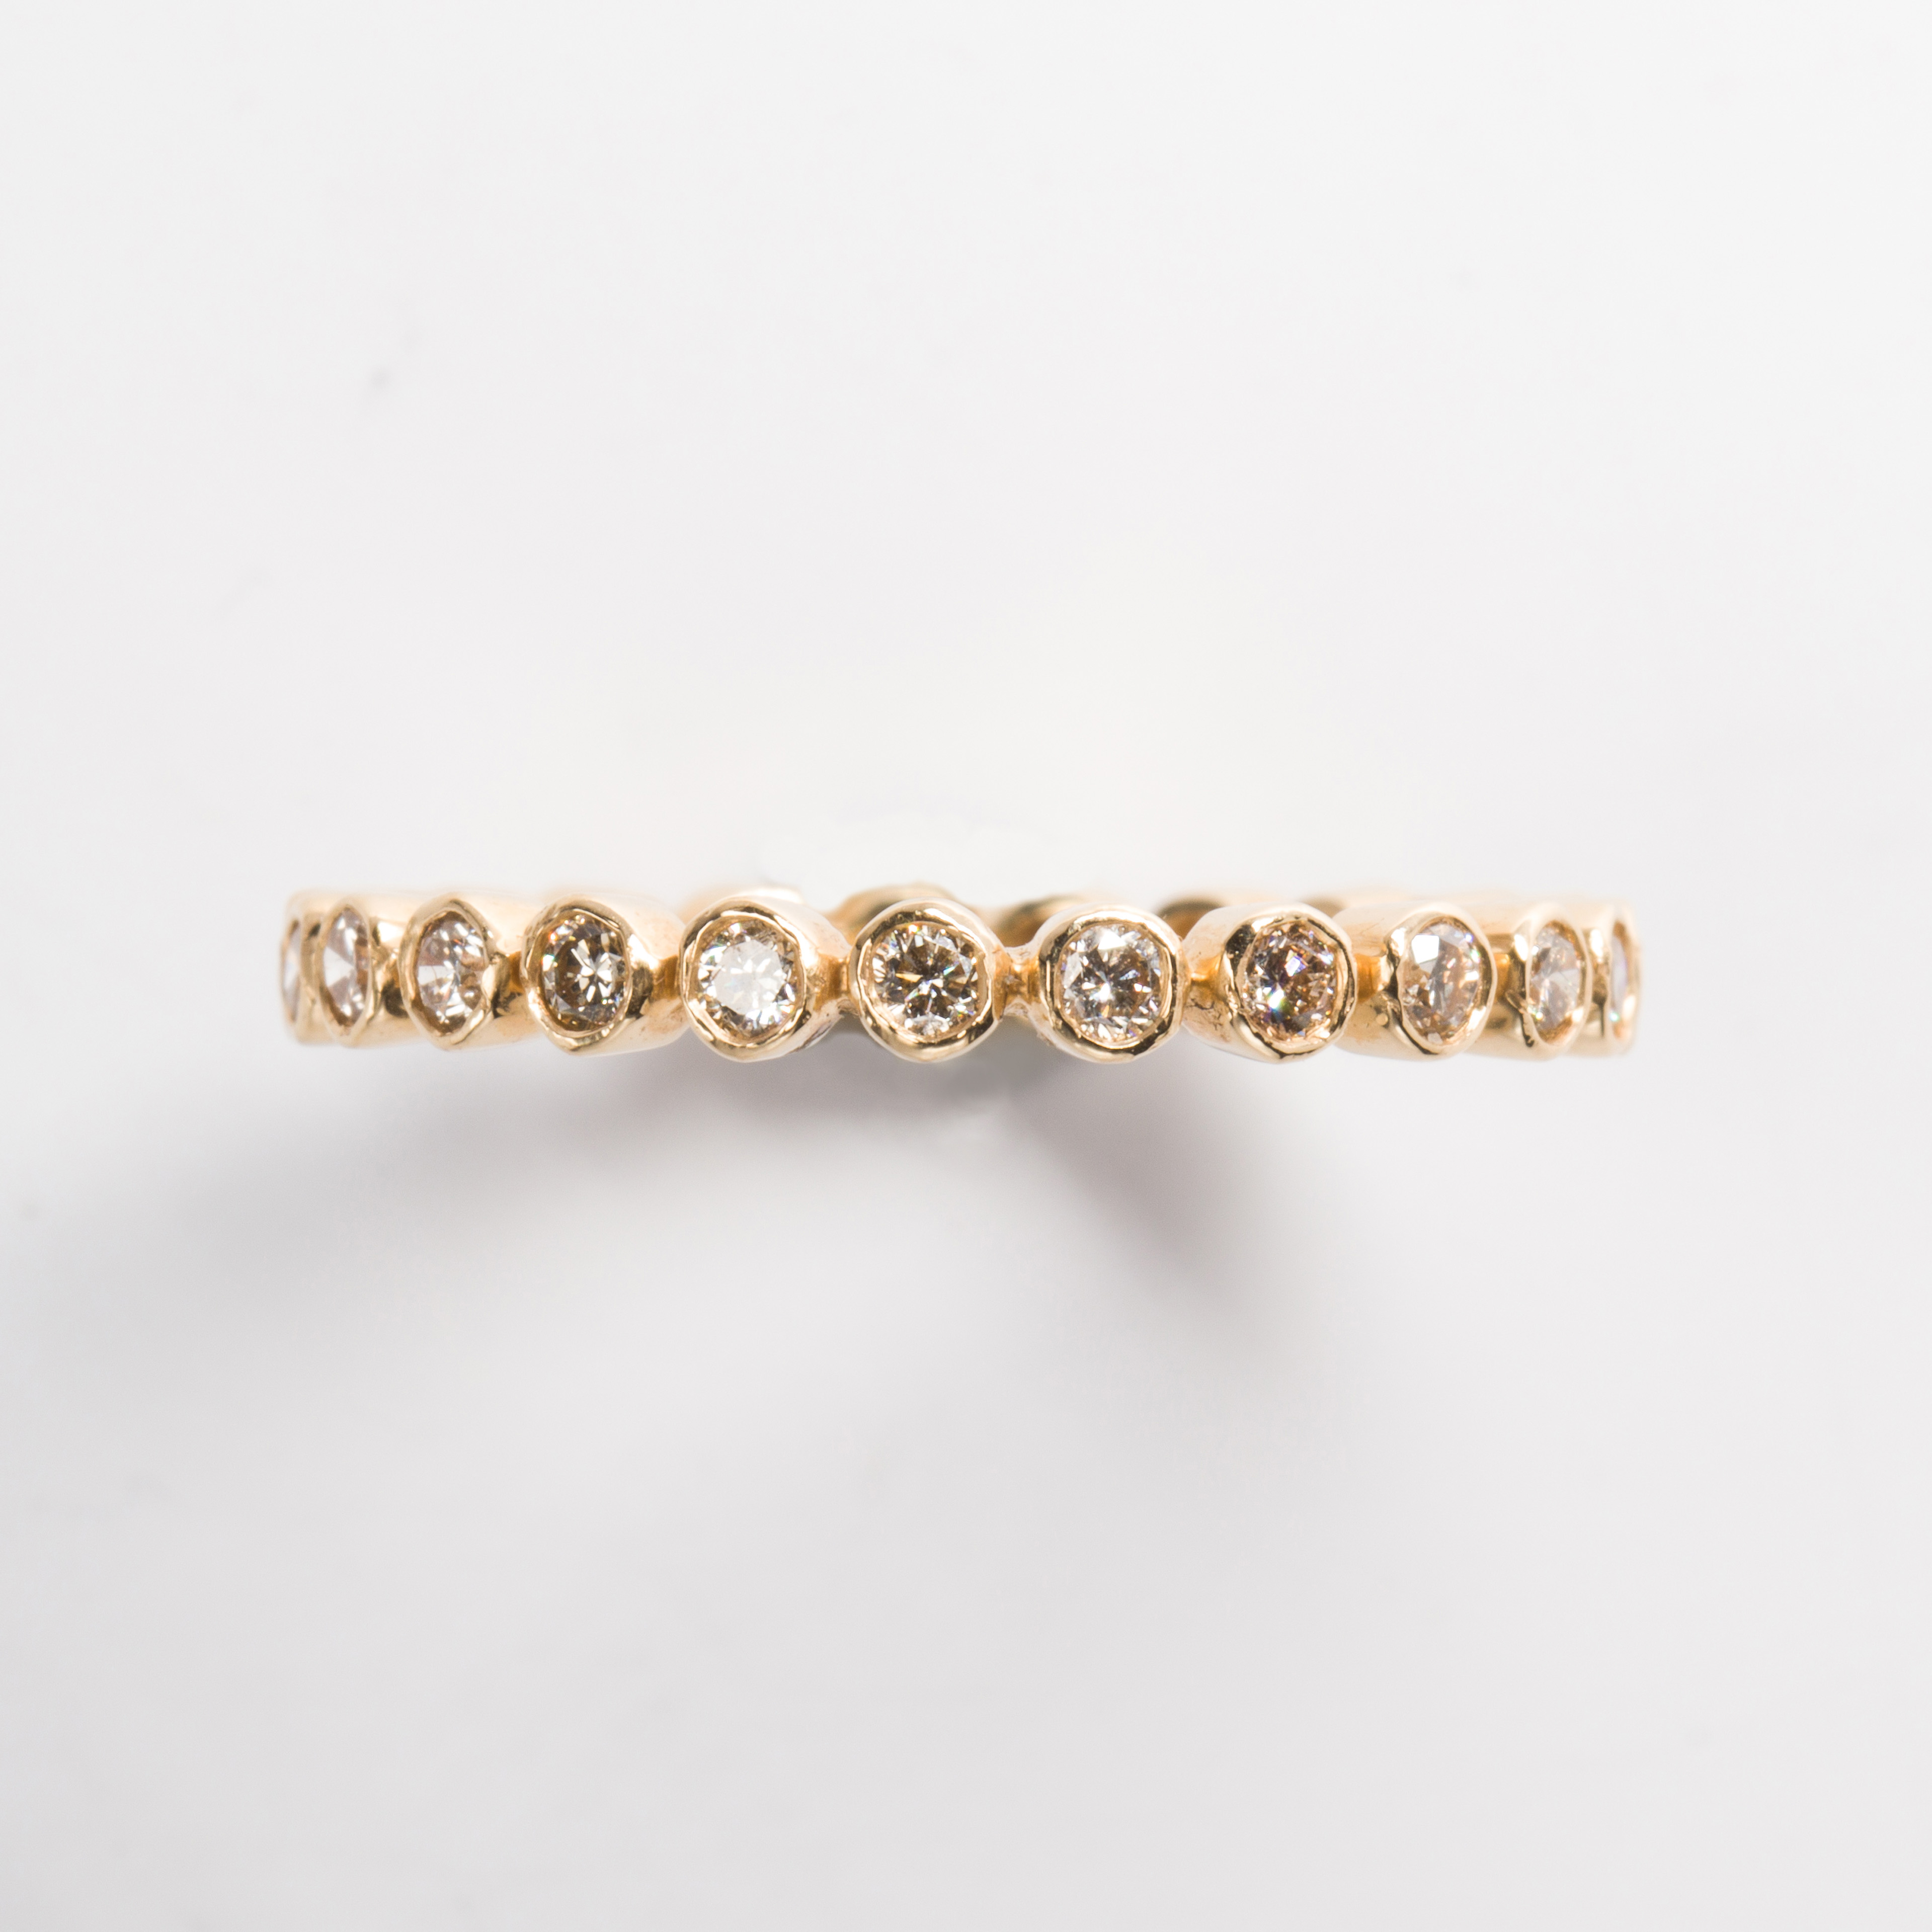 A diamond and eighteen karat gold band ring